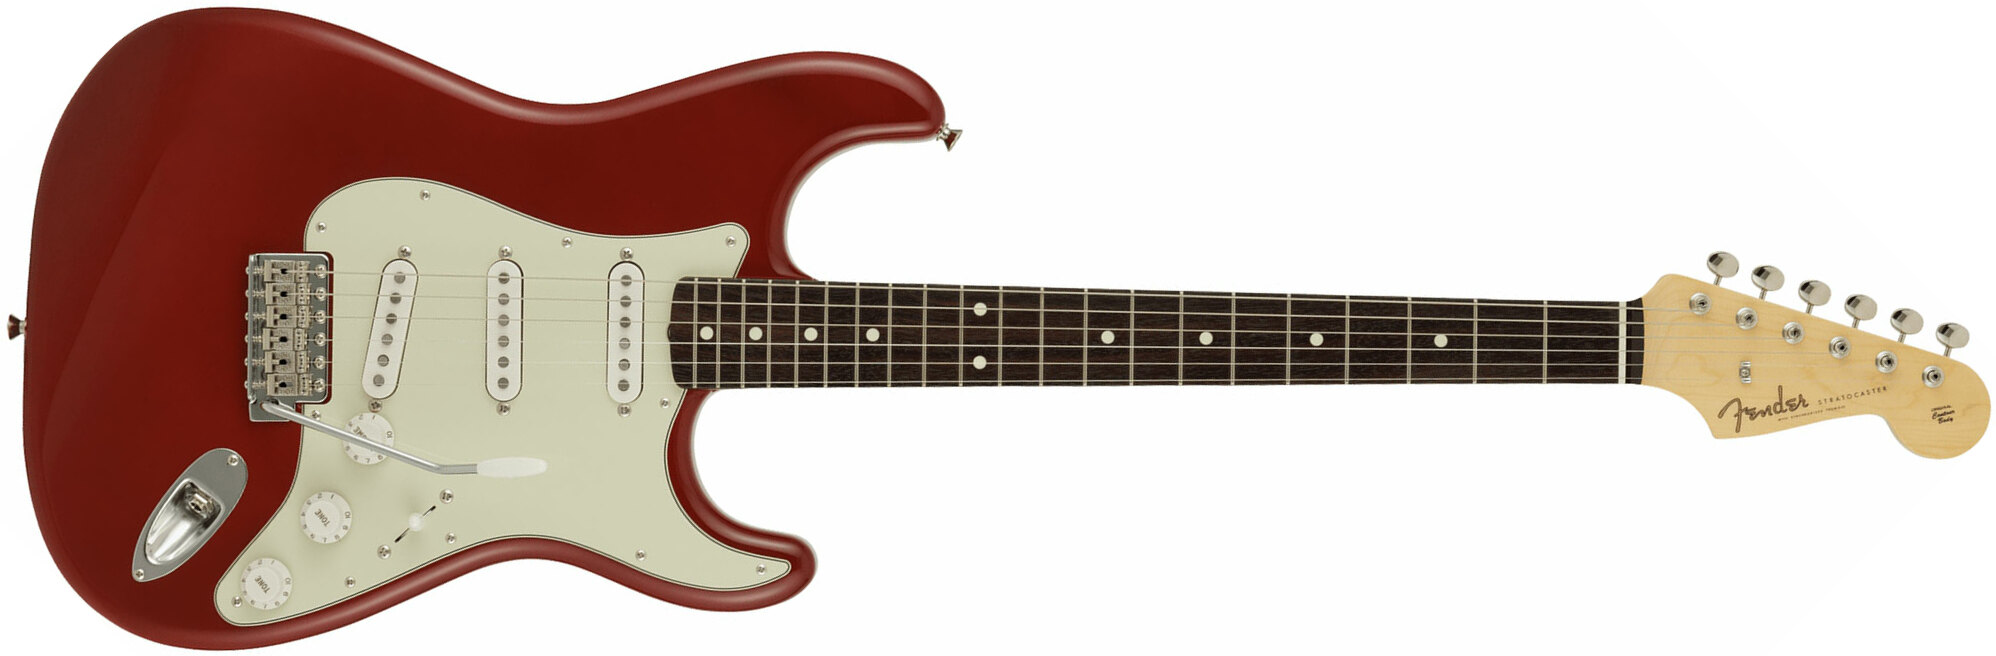 Fender Strat Traditional 60s Mij Jap 3s Trem Rw - Dakota Red Aged - E-Gitarre in Str-Form - Main picture